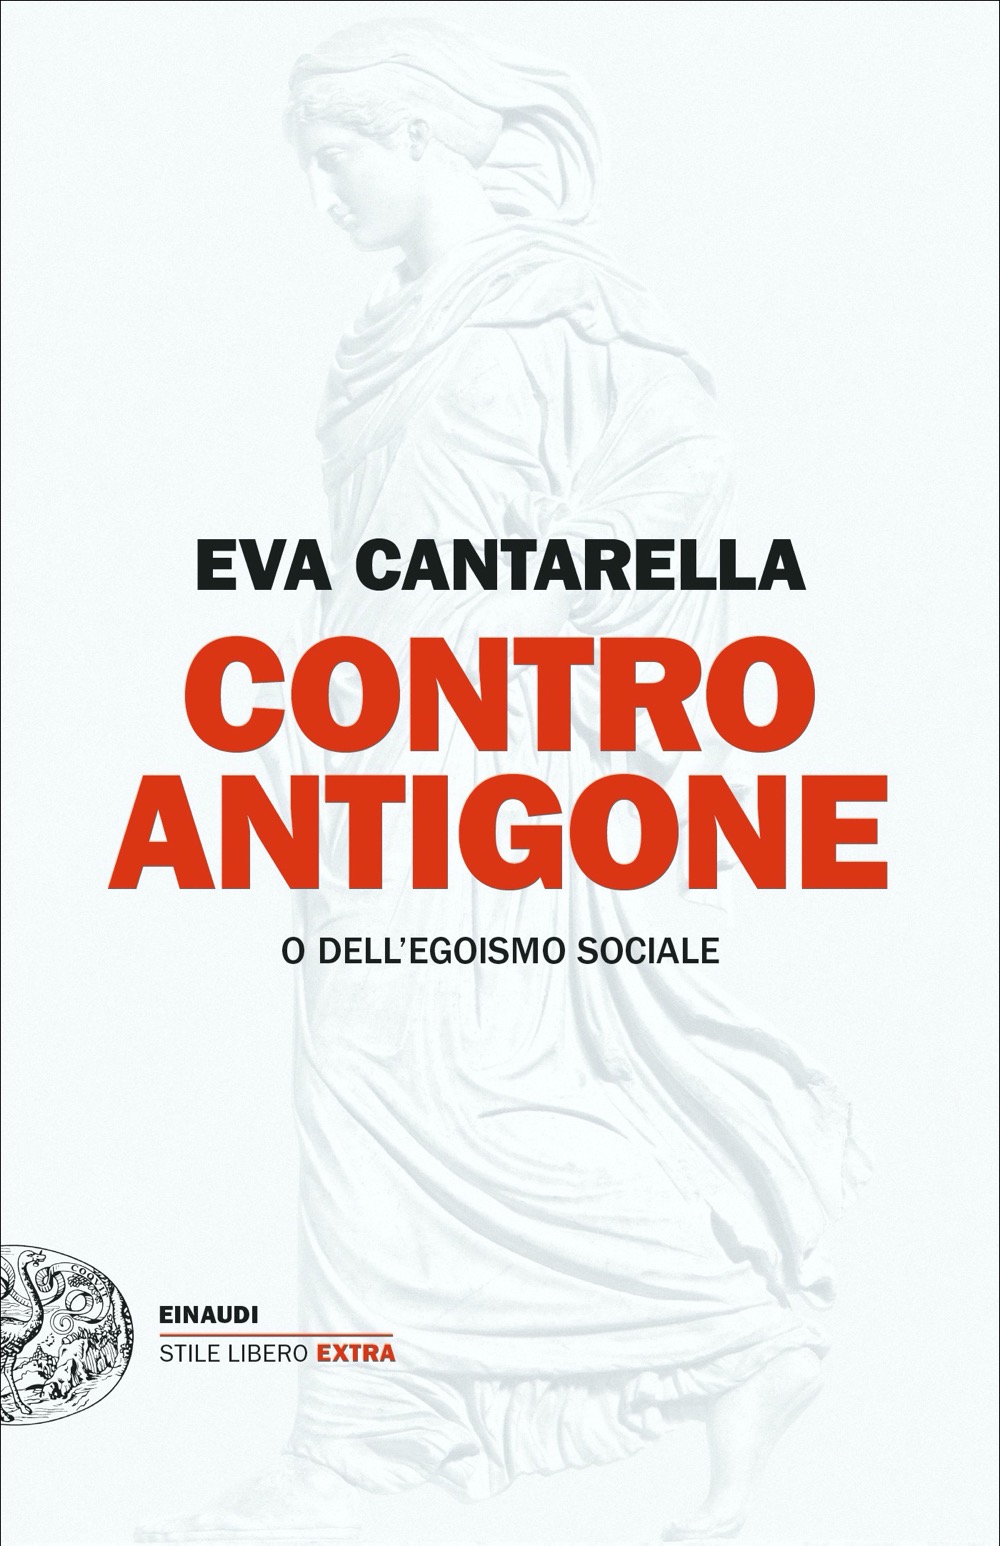 Contro Antigone, Eva Cantarella. Giulio Einaudi editore - Stile libero Extra